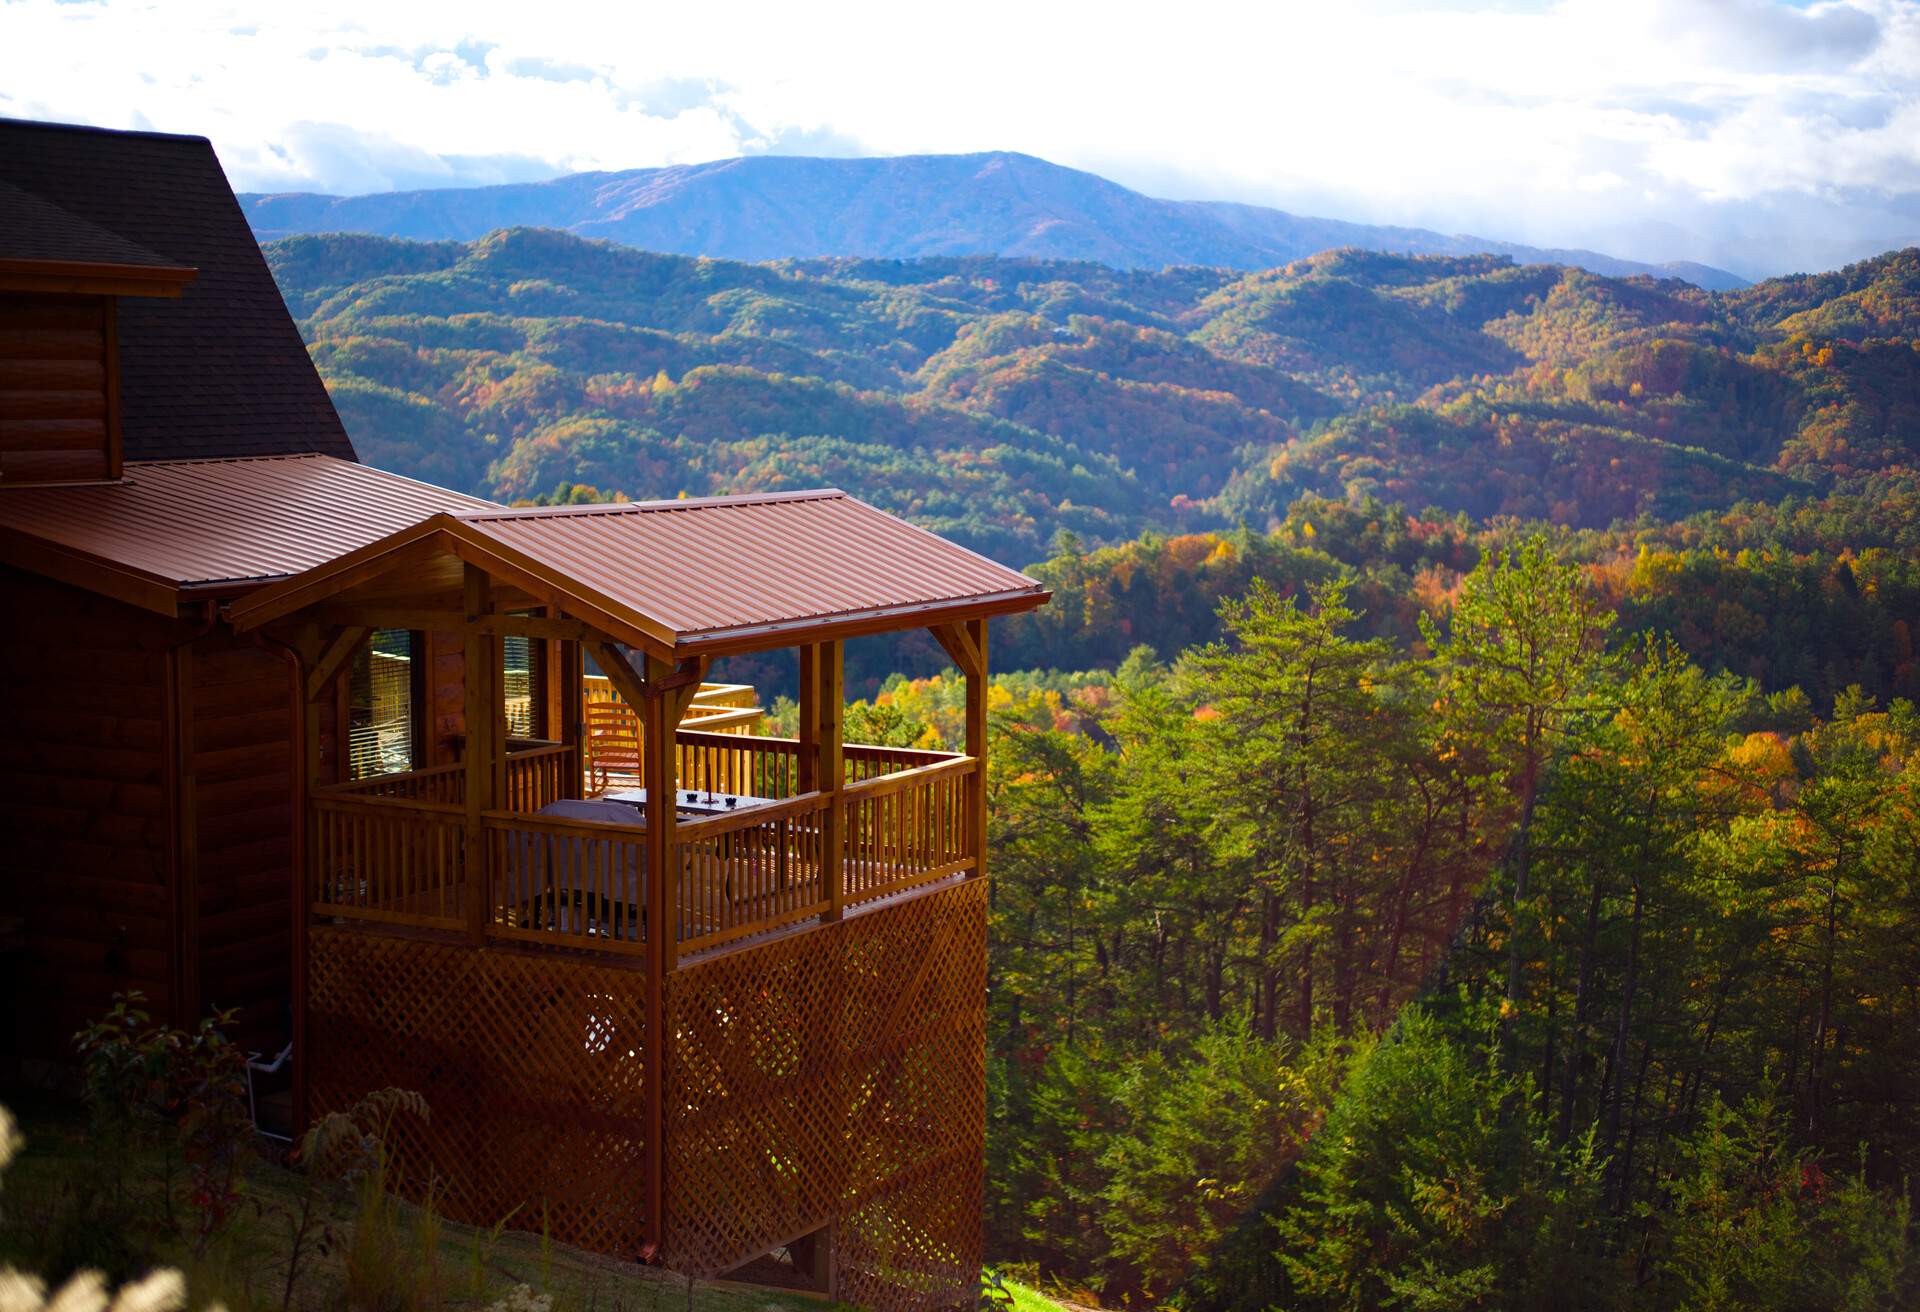 Blue Ridge Mountain Cabin View Smoky; Shutterstock ID 1064112713